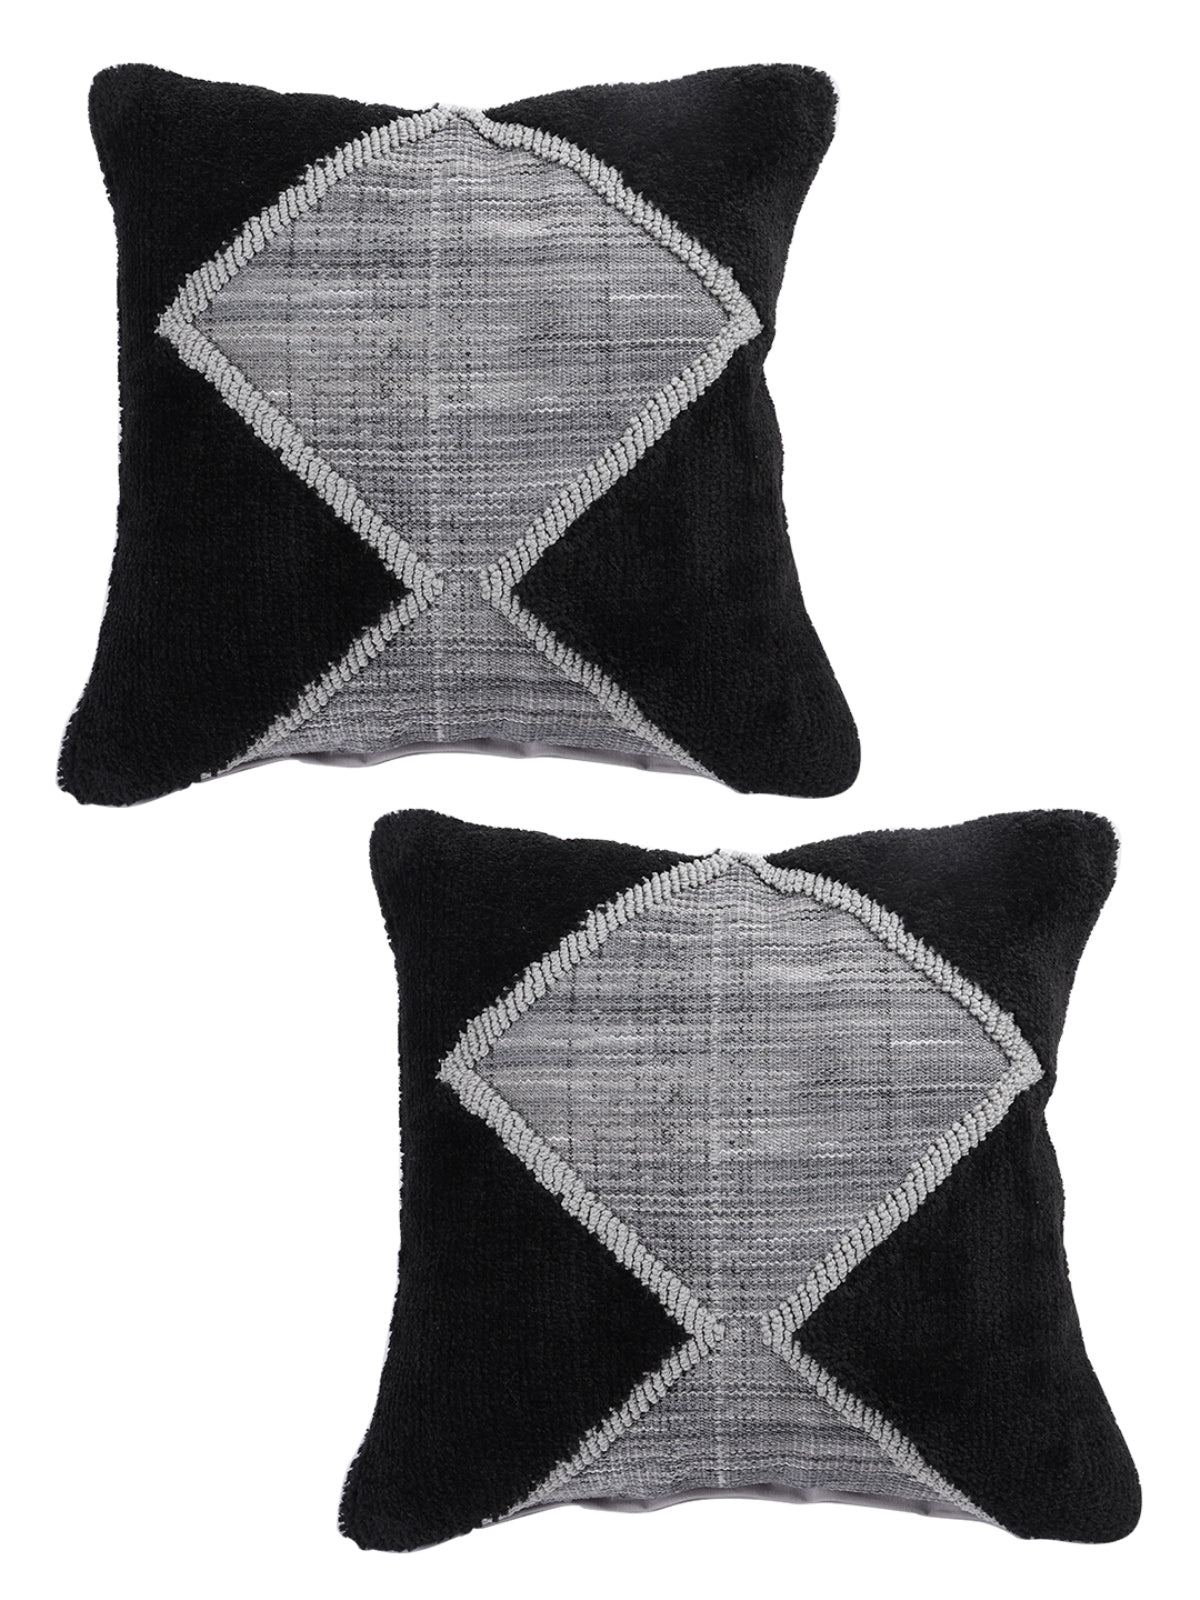 ROMEE Black ZigZag Printed Cushion Covers Set of 2